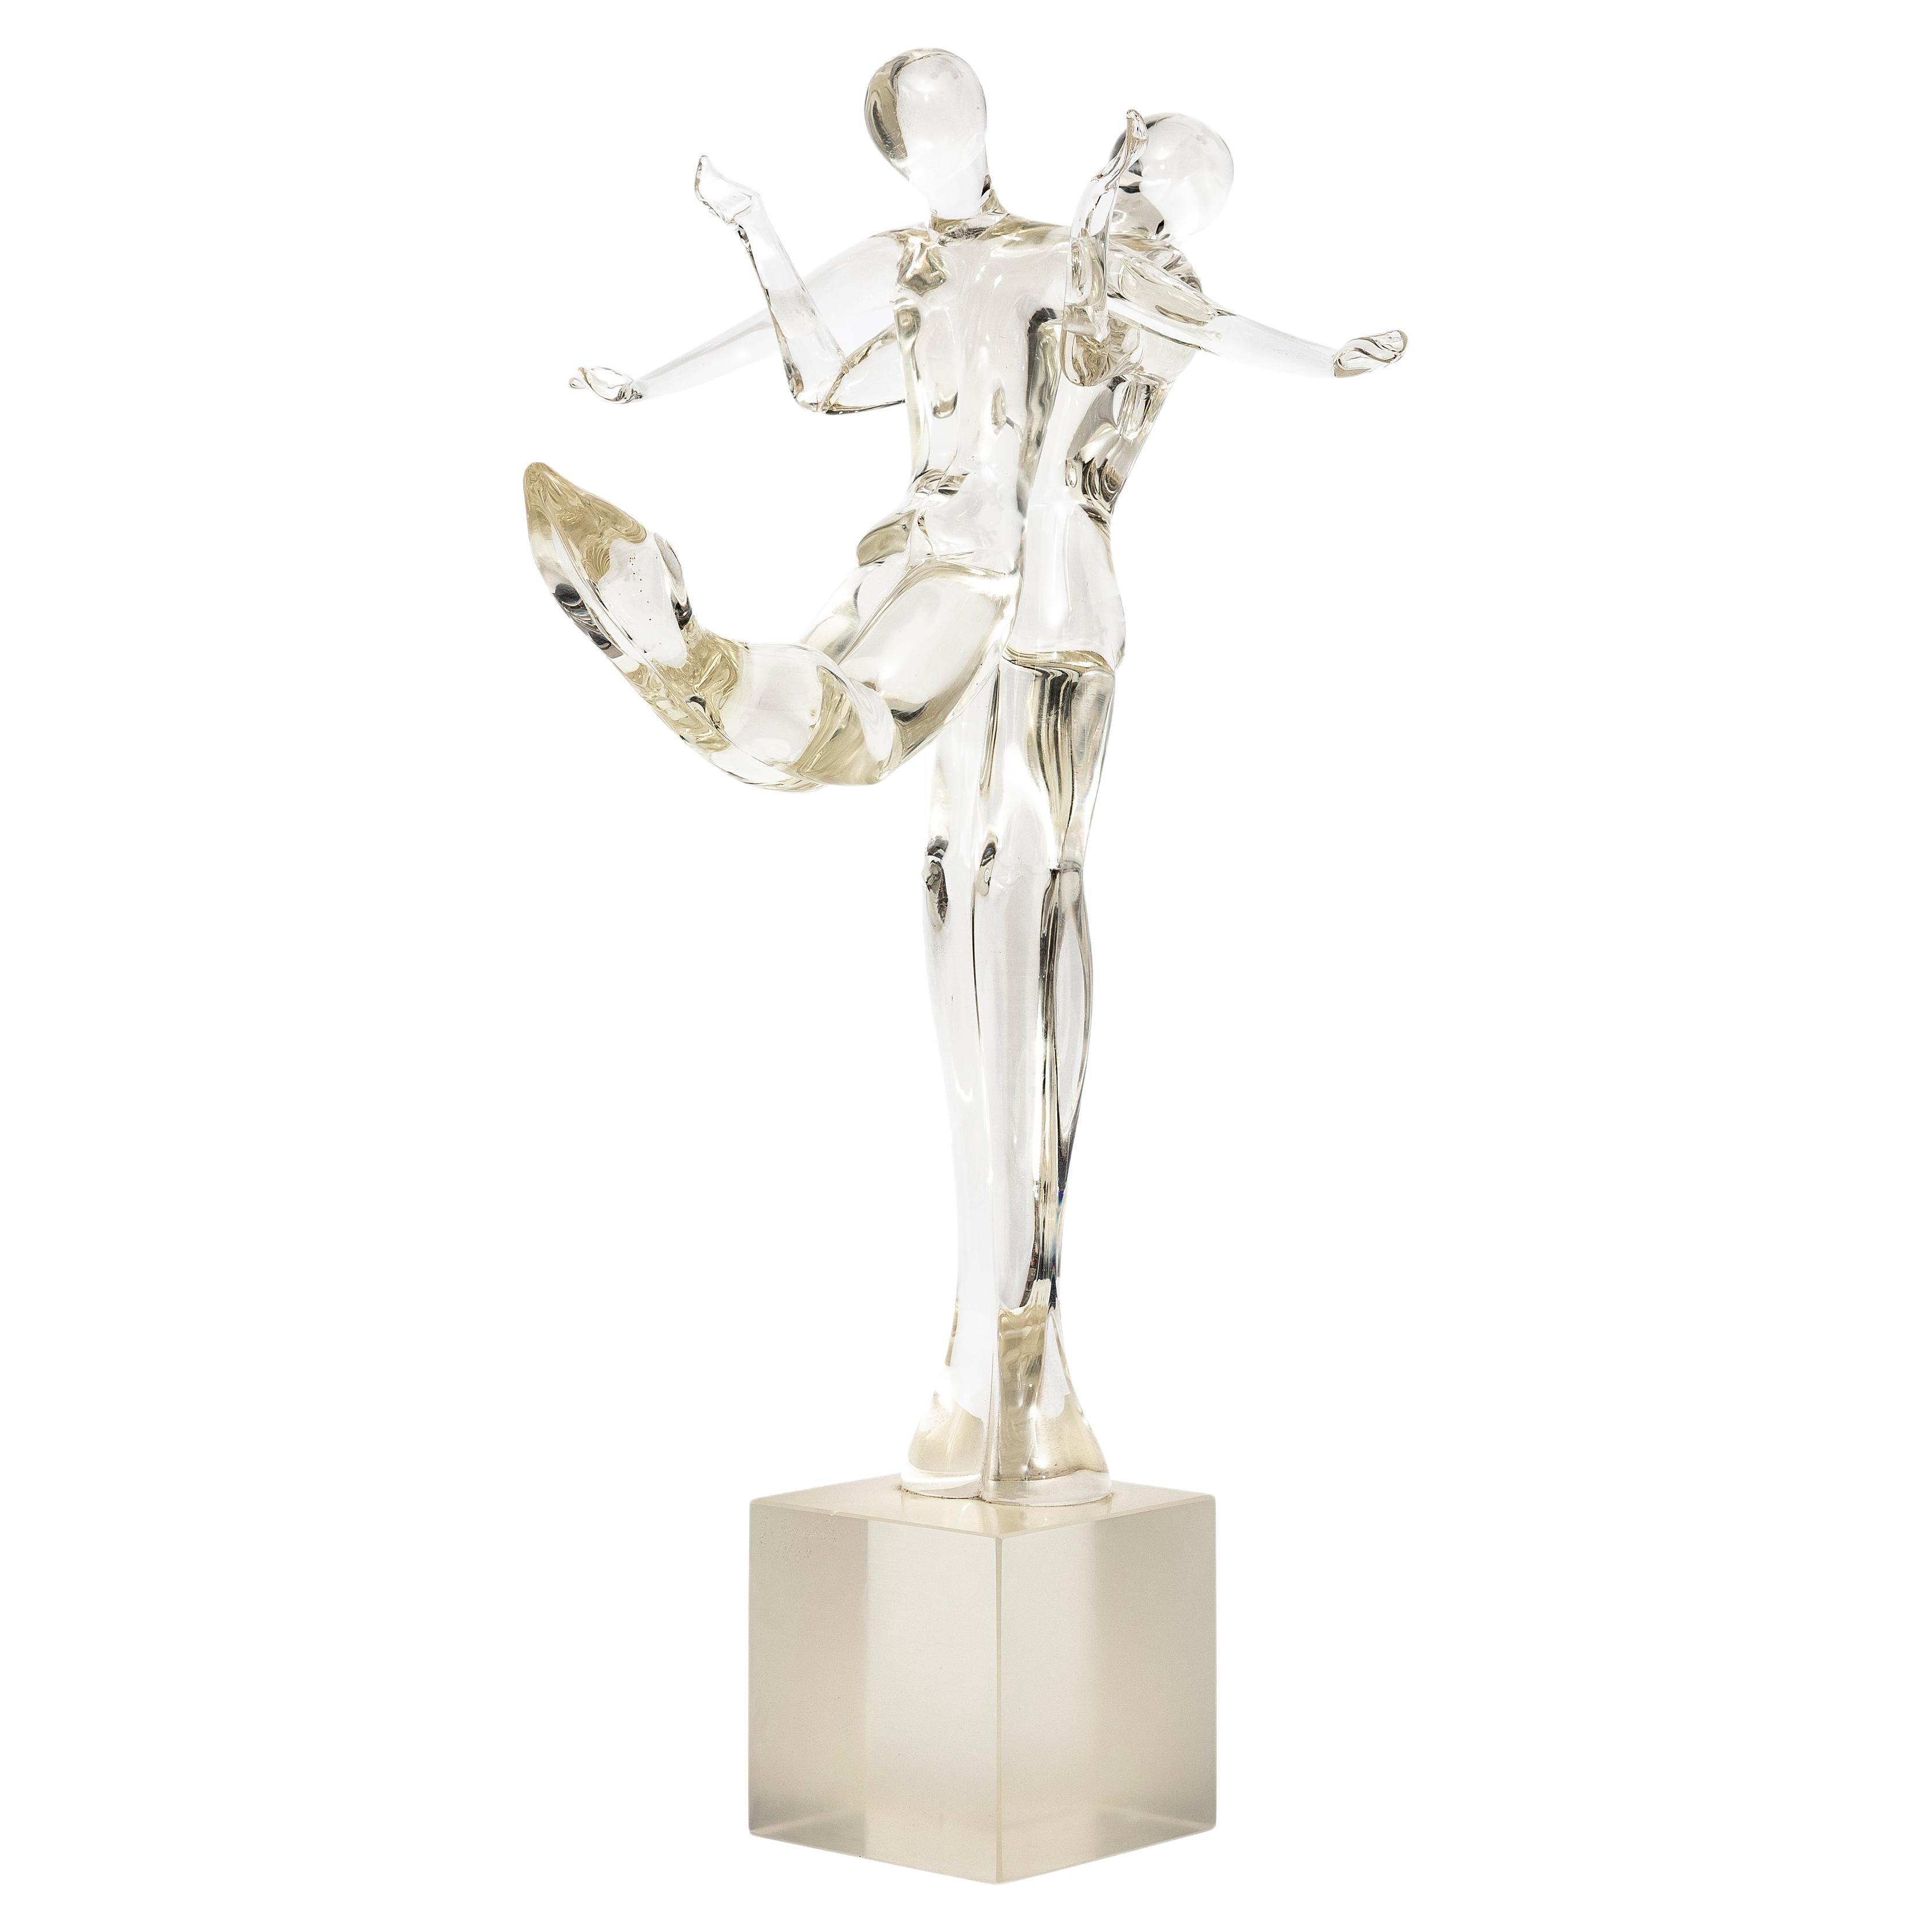 A Two-piece Renato Anatra Gymnast Dancer Sculpture by Murano Art Glass, Signed